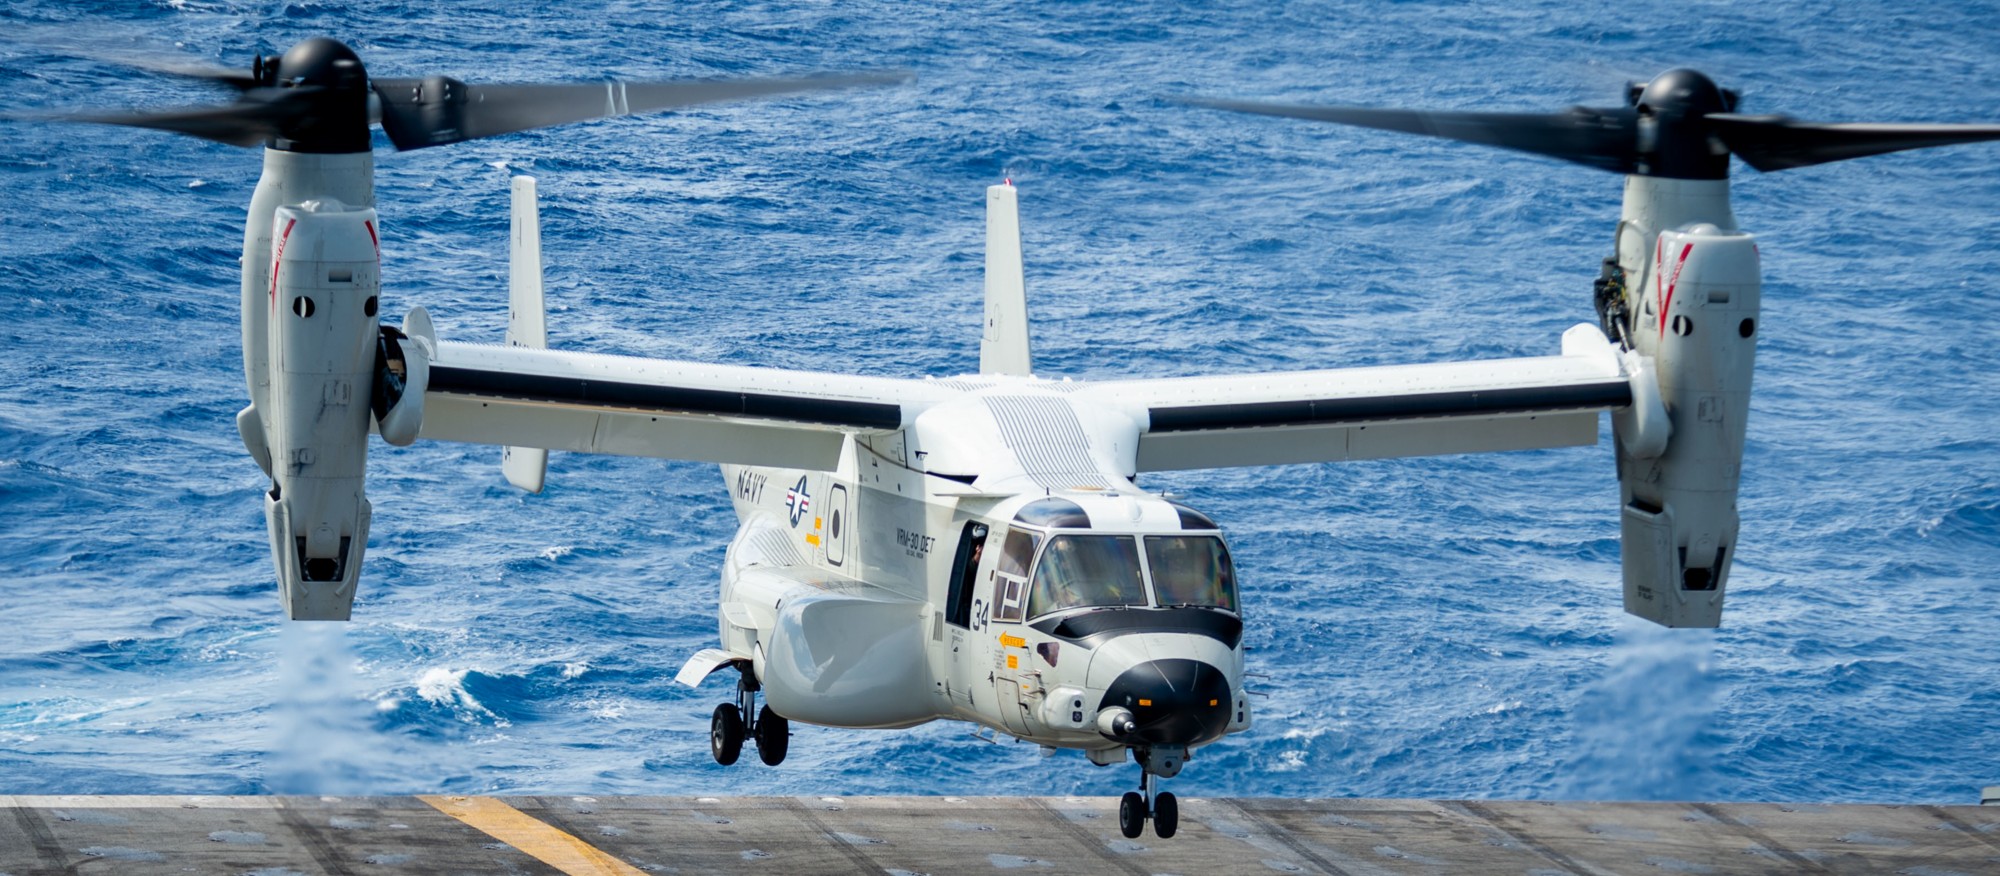 vrm-30 titans fleet logistics multi mission squadron us navy cmv-22b osprey uss carl vinson 63